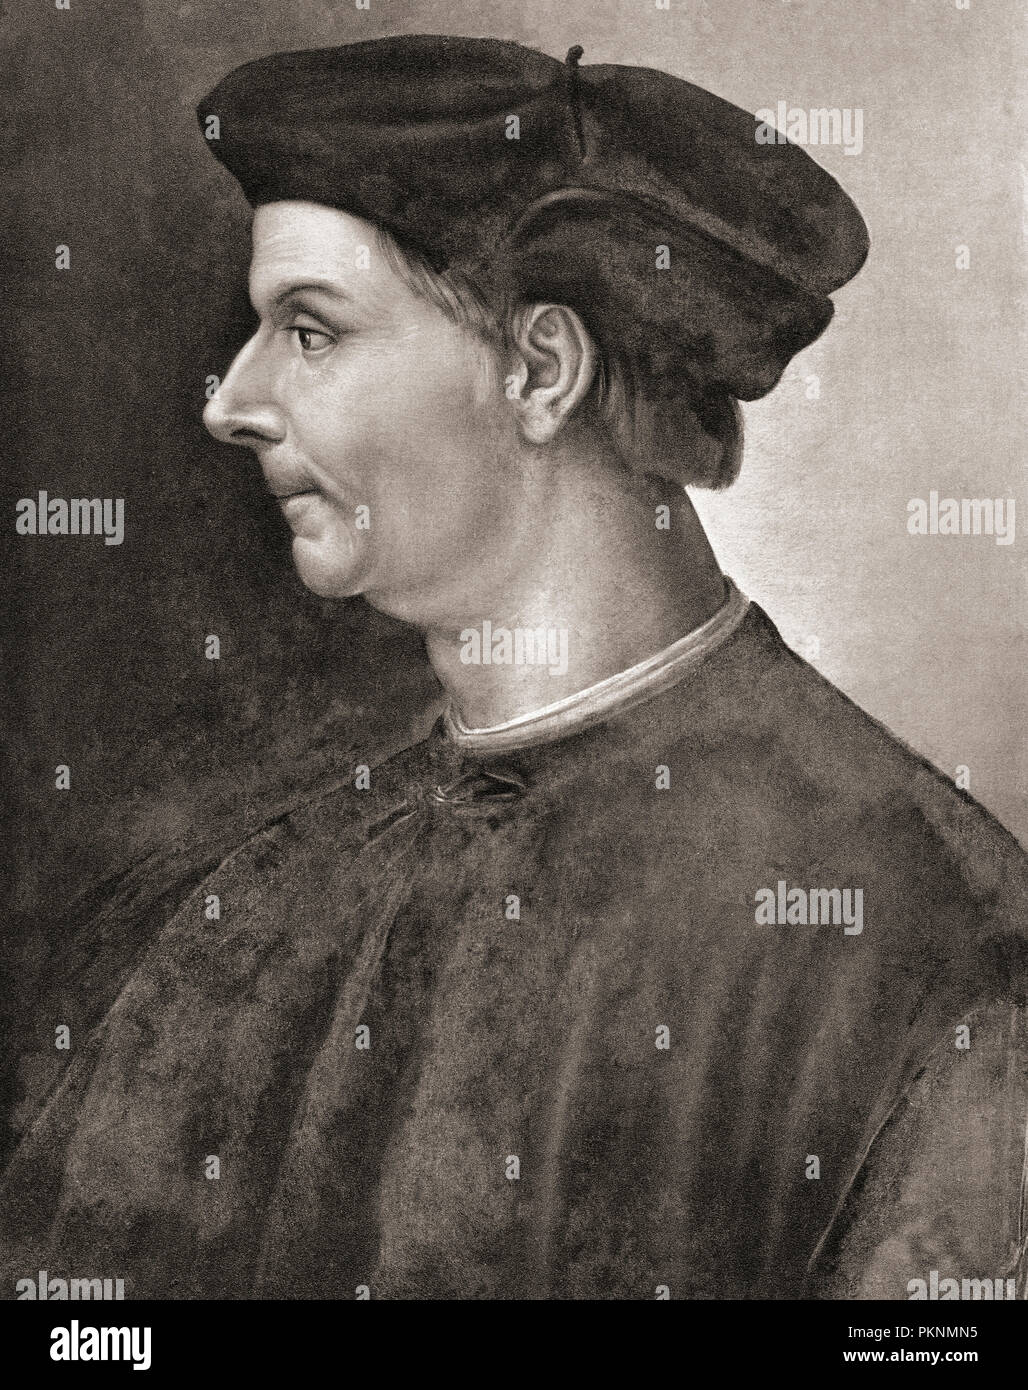 Niccolò di Bernardo dei Machiavelli, 1469 - 1527. Italienischer Diplomat, Politiker, Historiker, Philosoph, Humanist und Schriftsteller der Renaissance. Stockfoto